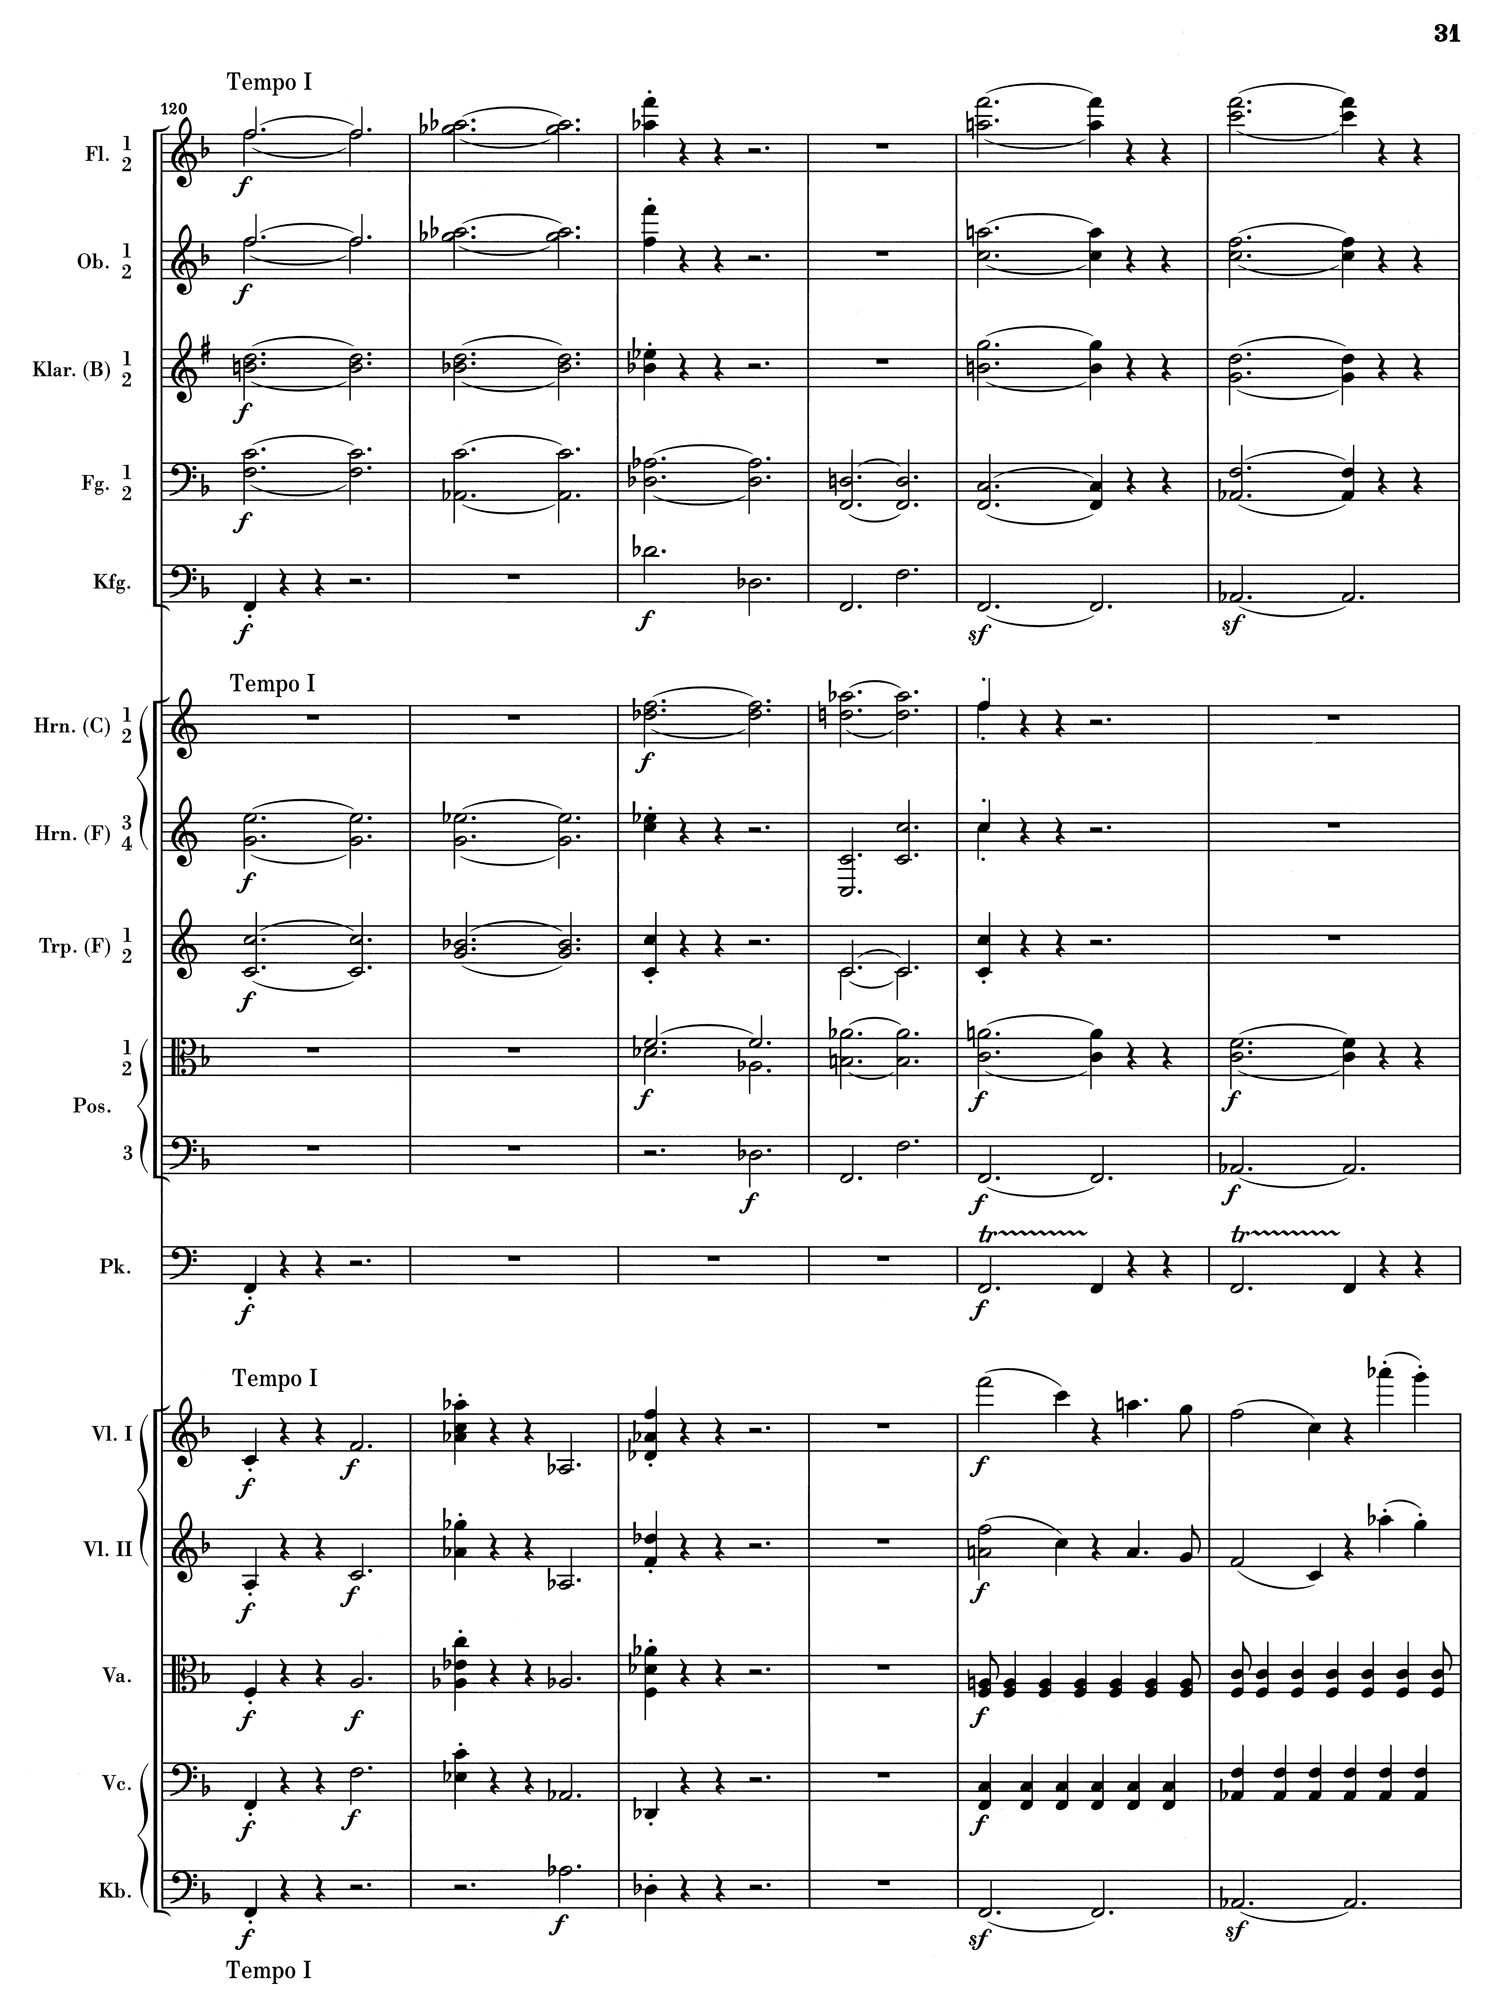 Brahms 3 Score 6.jpg